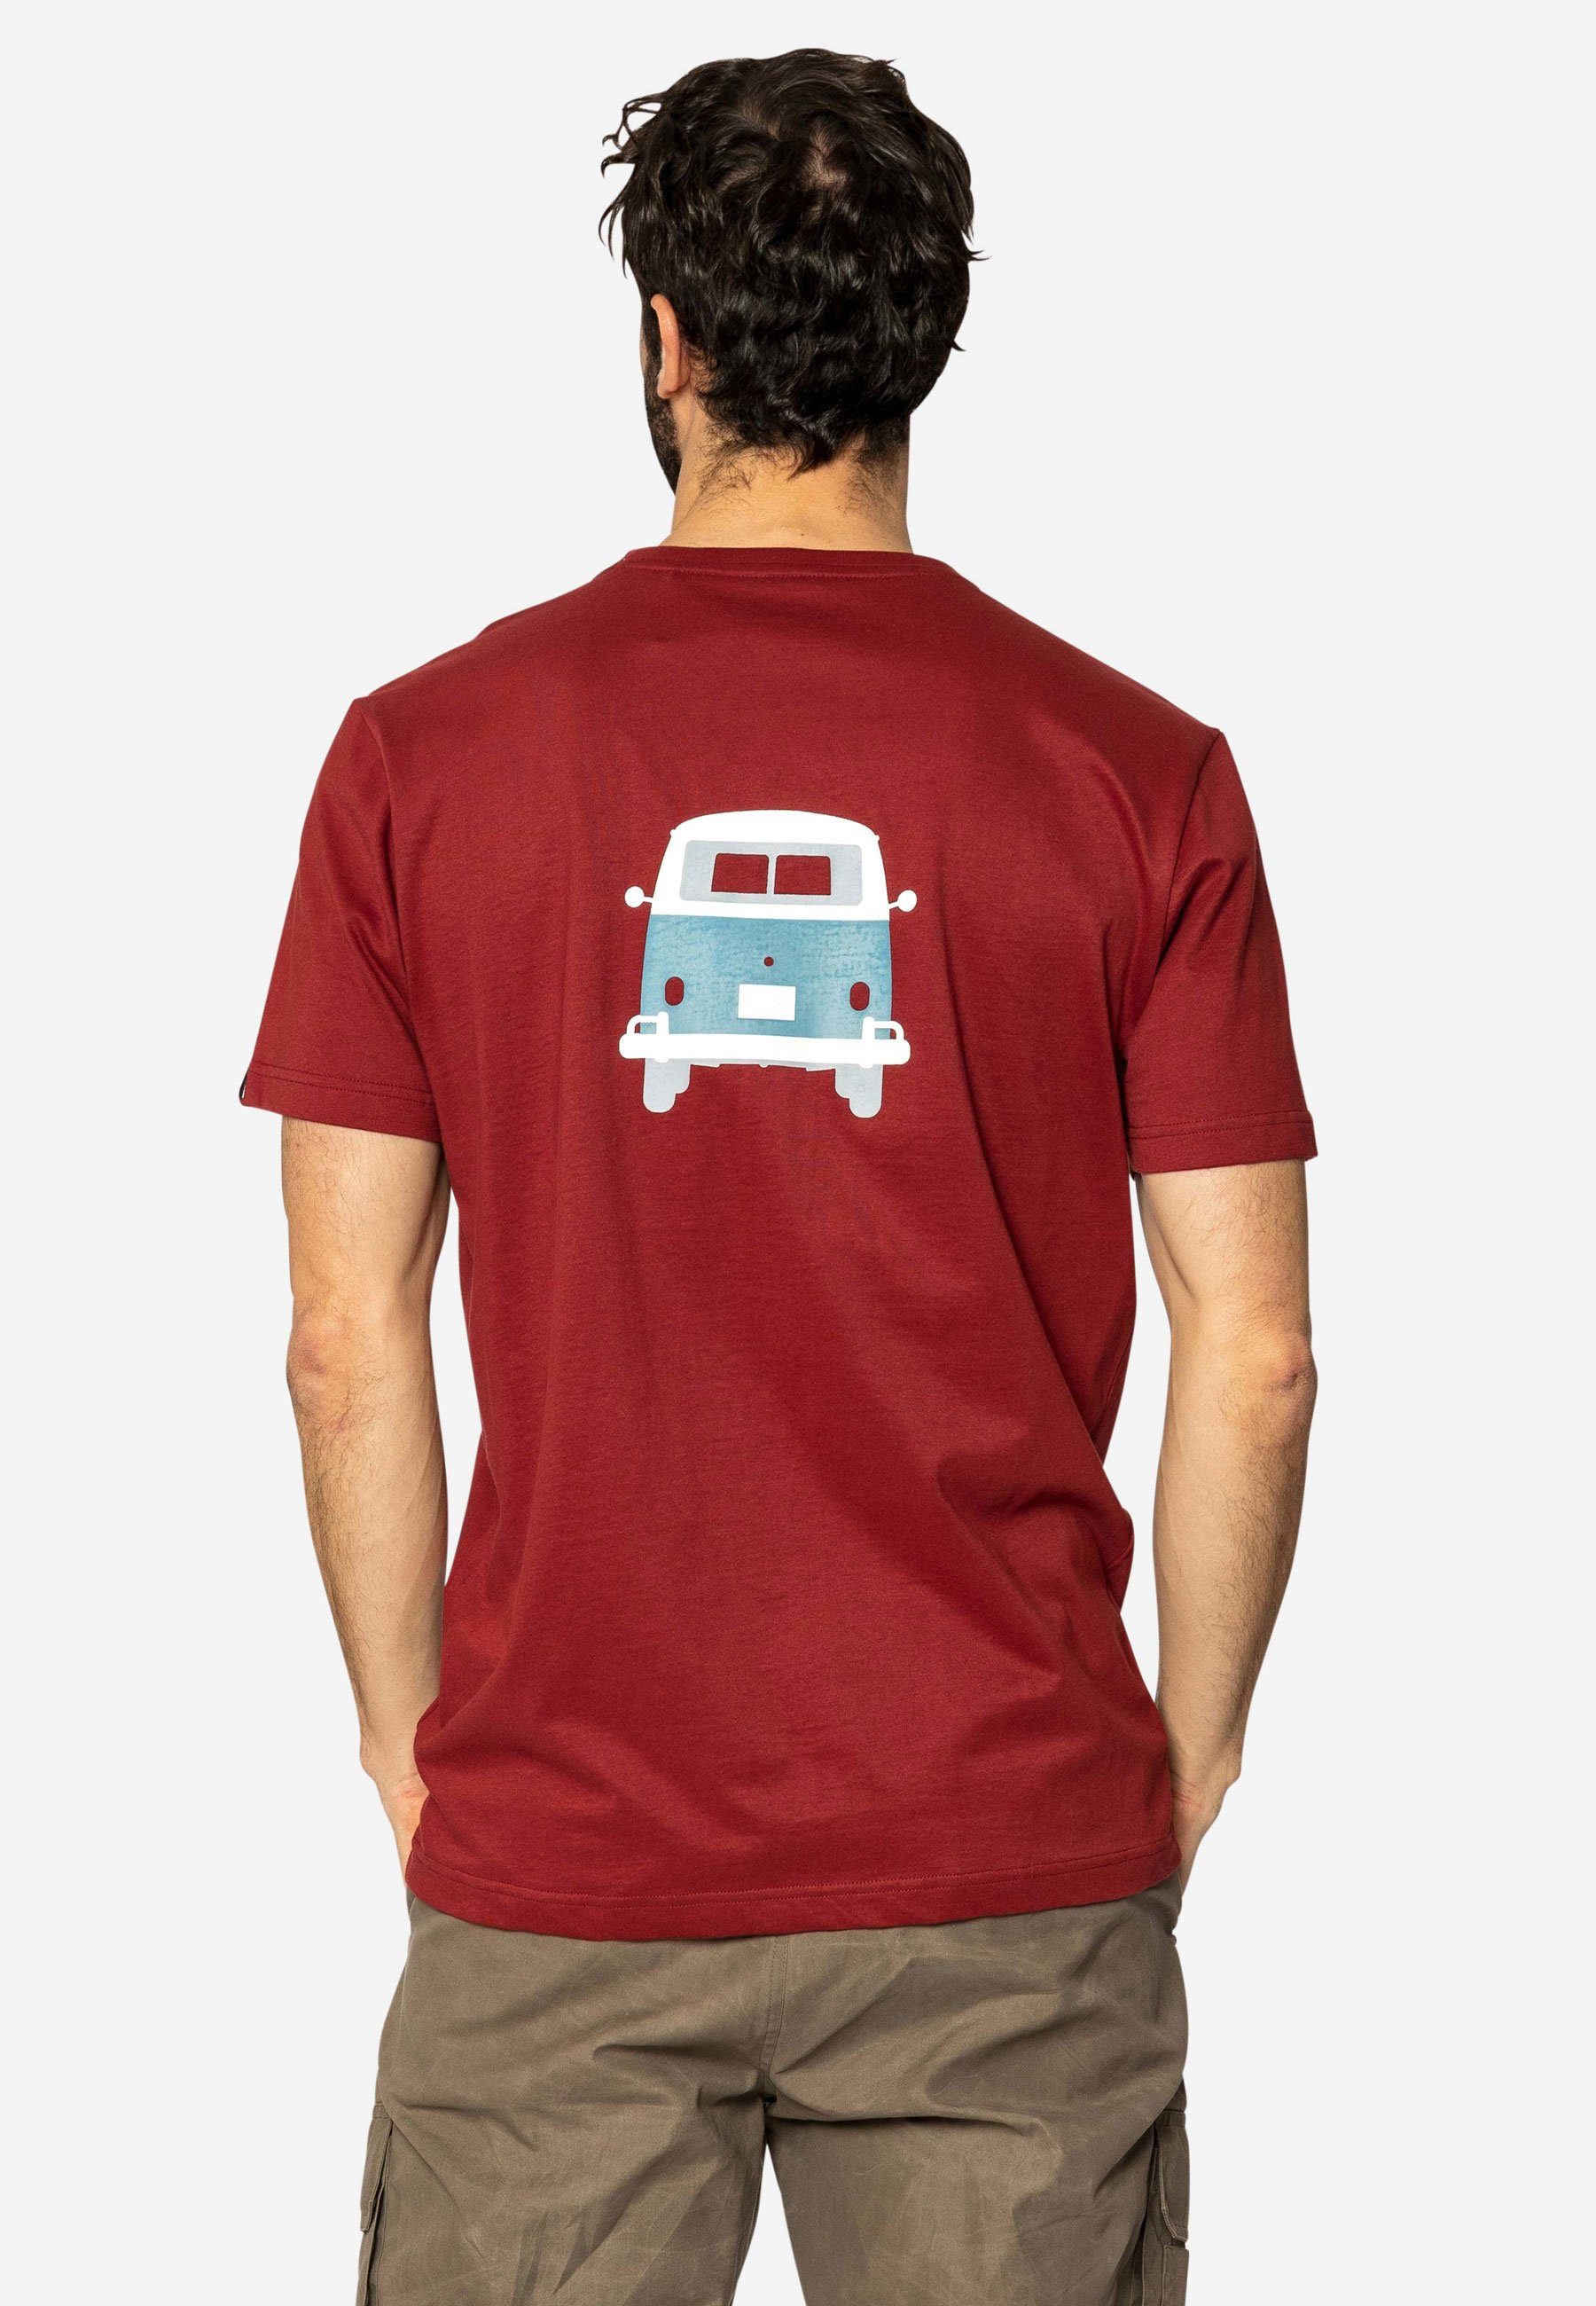 Methusalem Print syrahred lizenzierter T-Shirt Elkline VW Rücken Brust Bulli